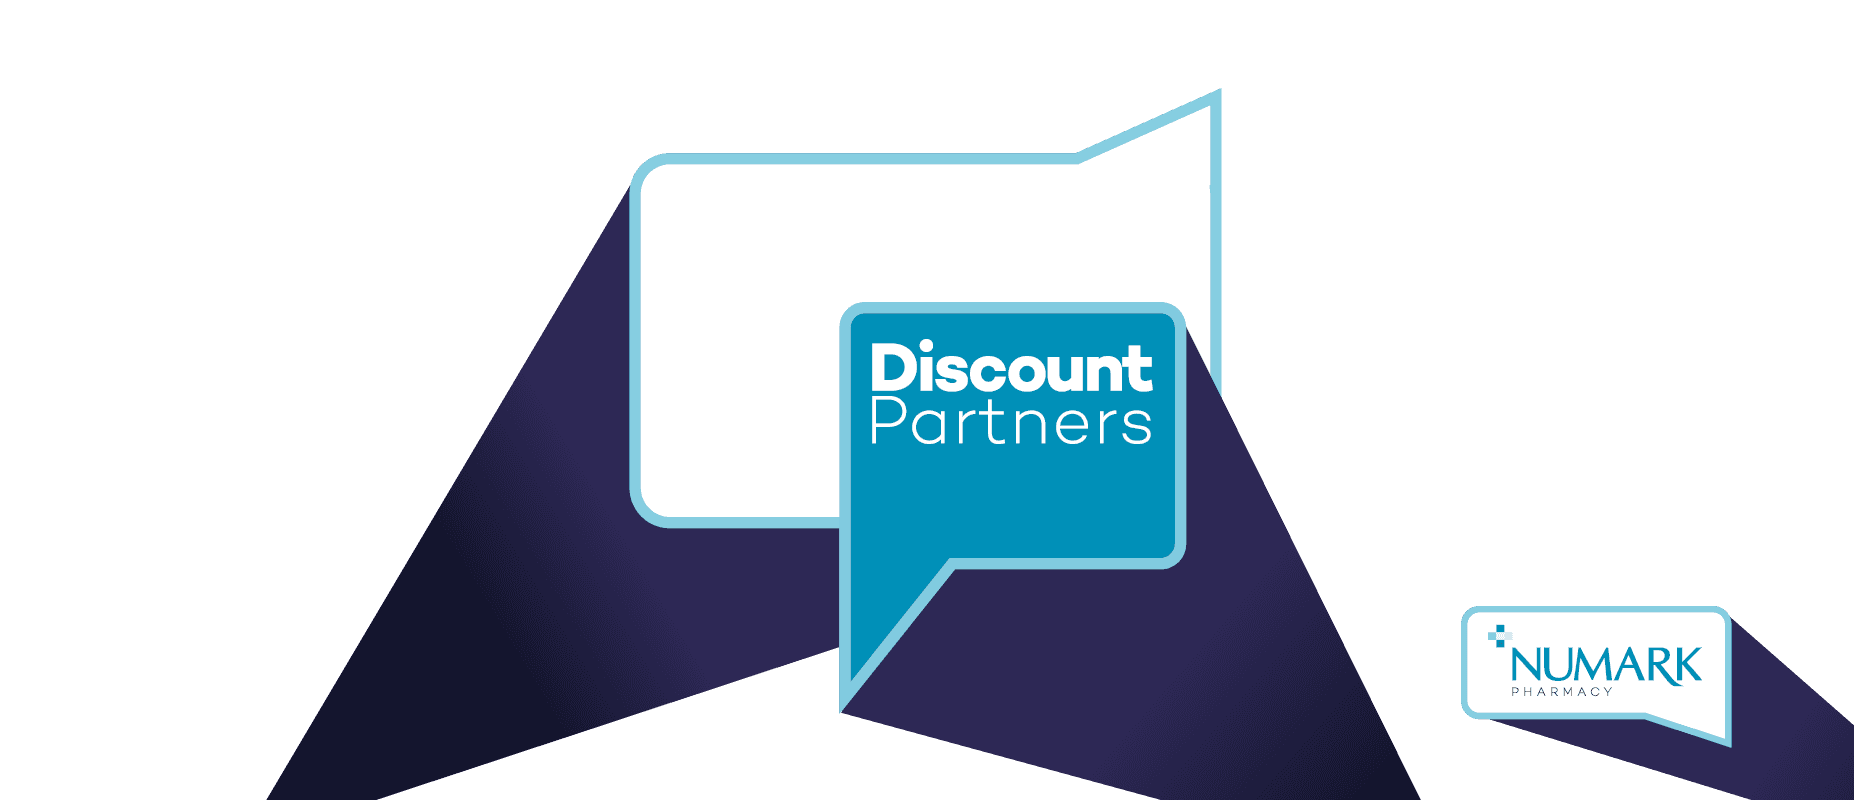 Discount Partners